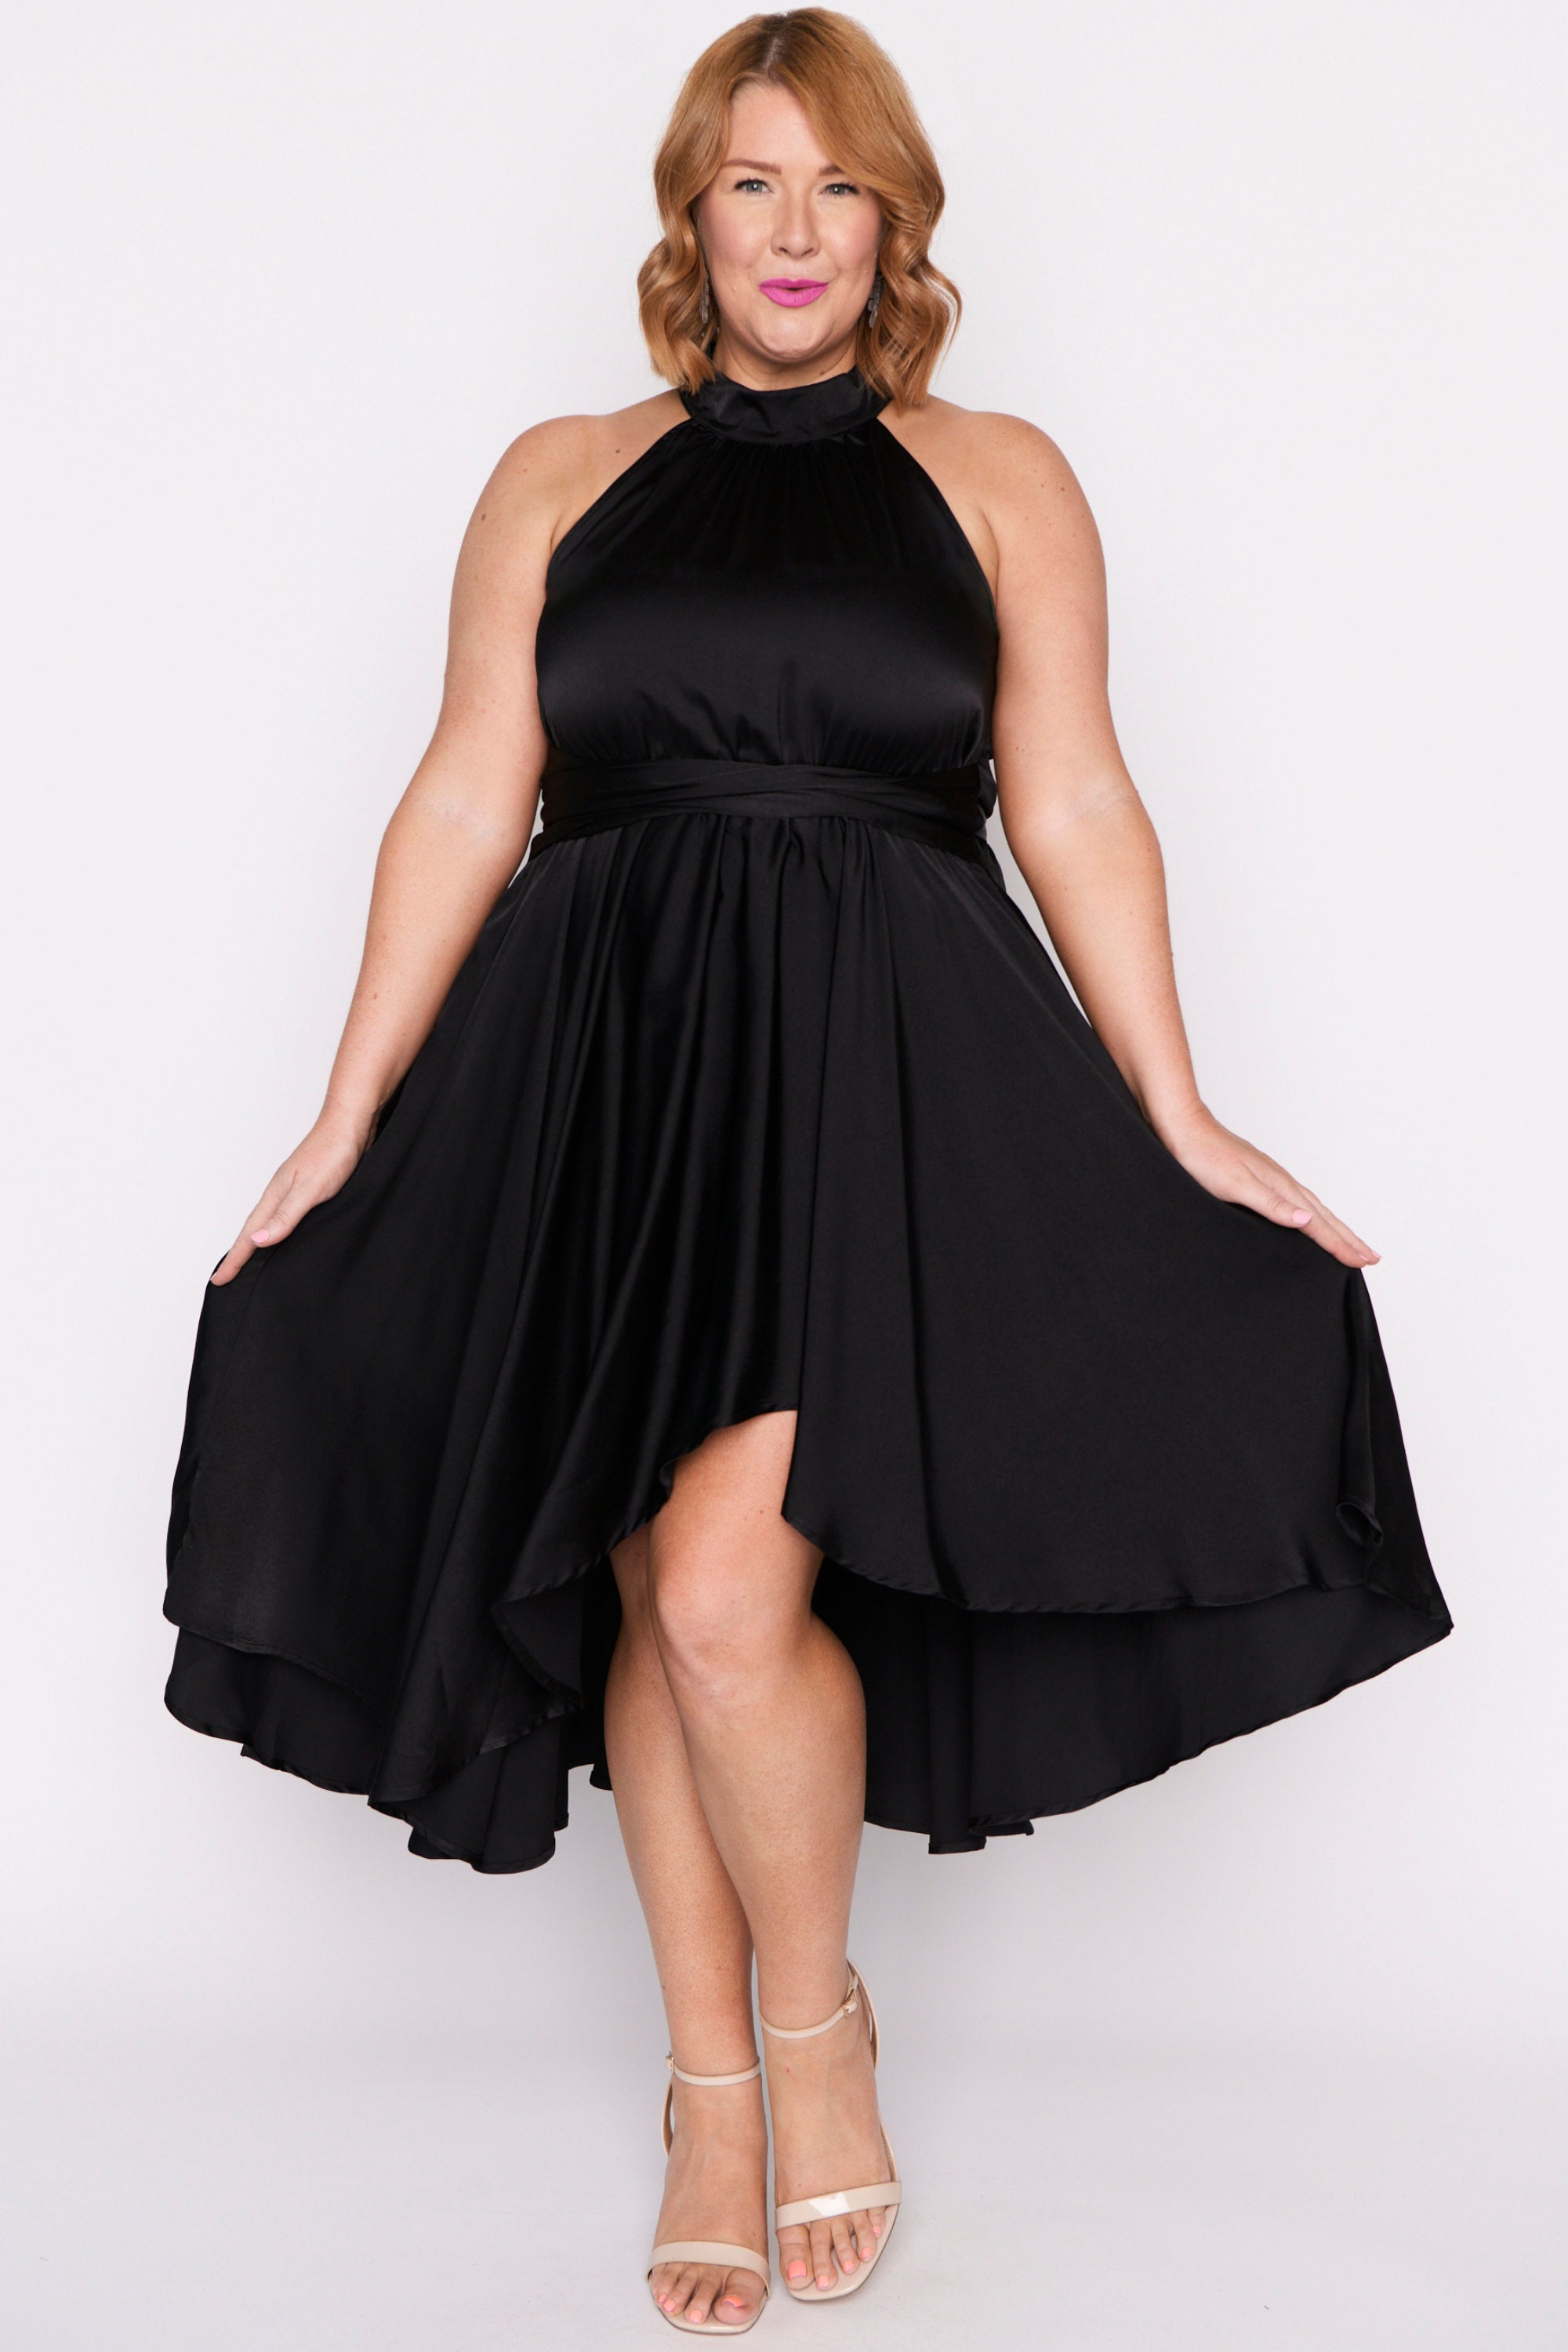 Oceania Black Party Dress – Little Party Dress